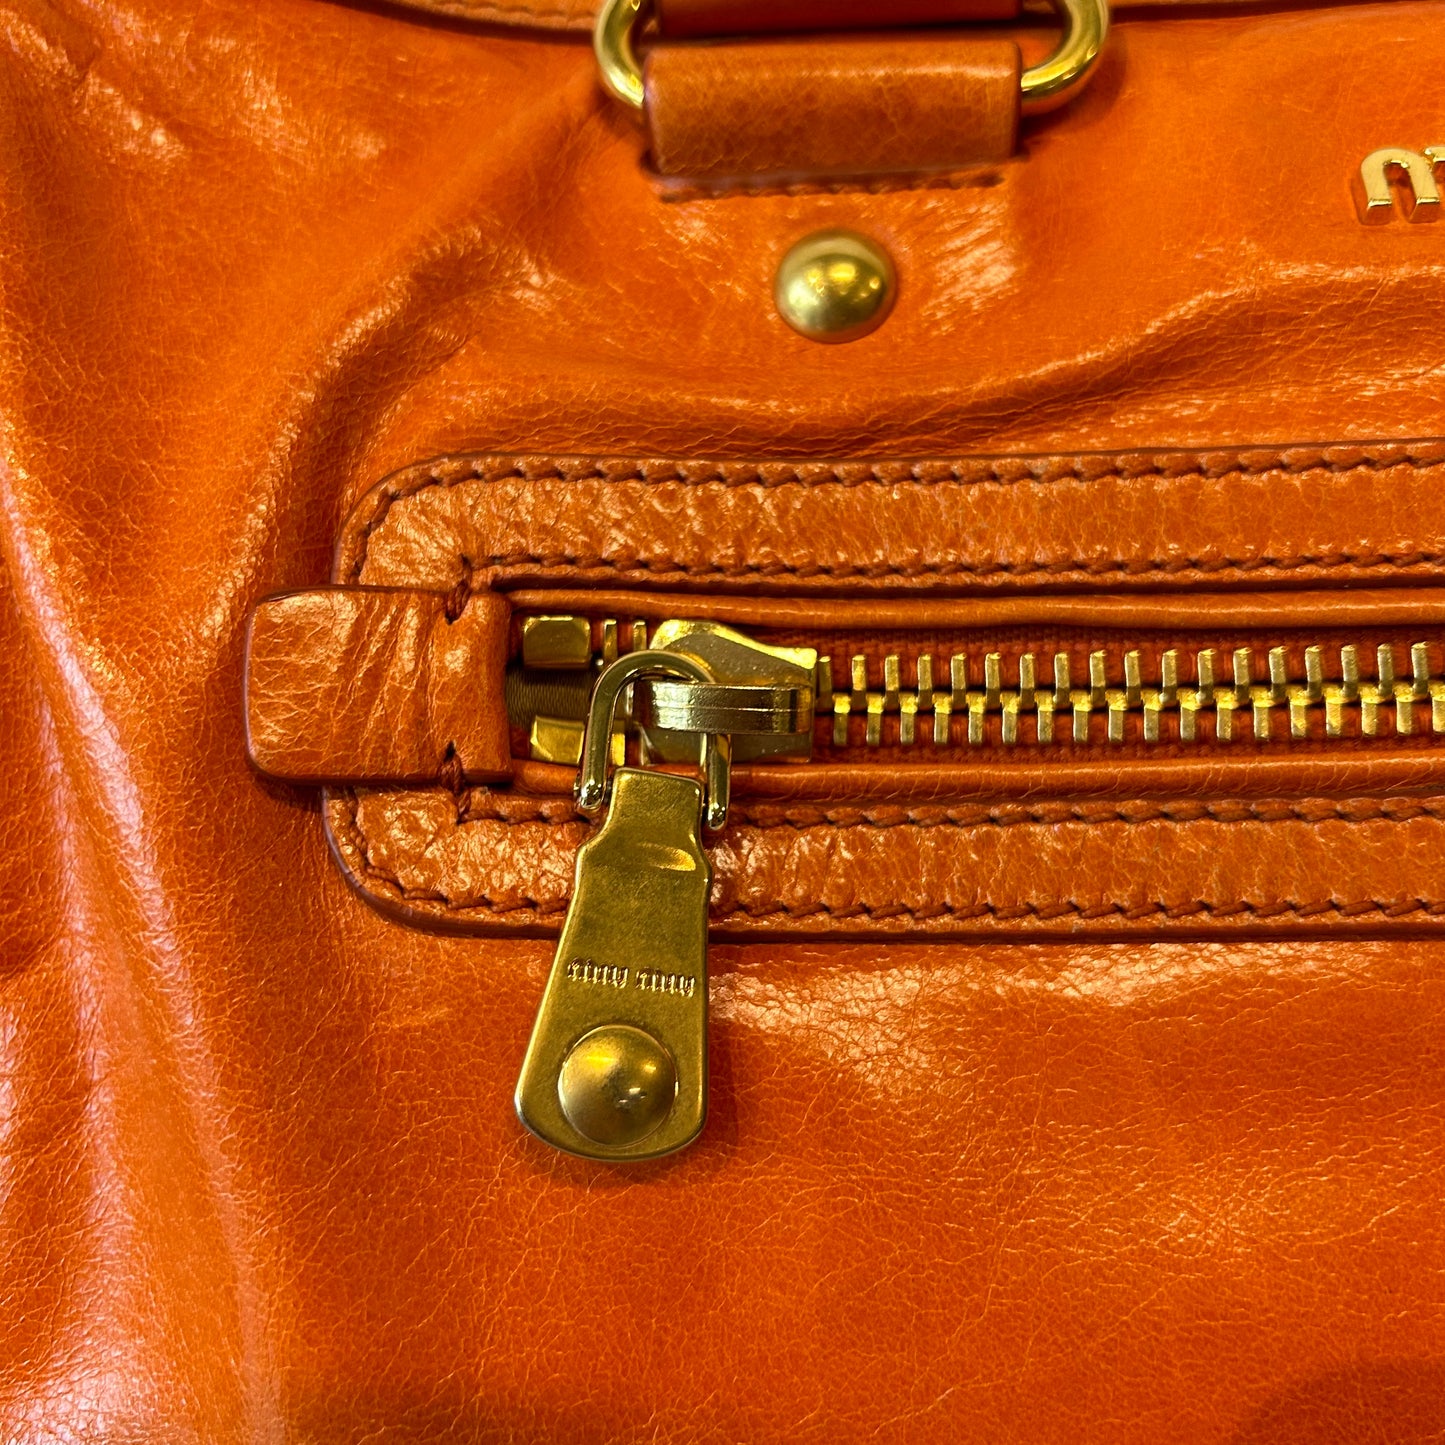 Miu Miu Orange Top Handle Handbag